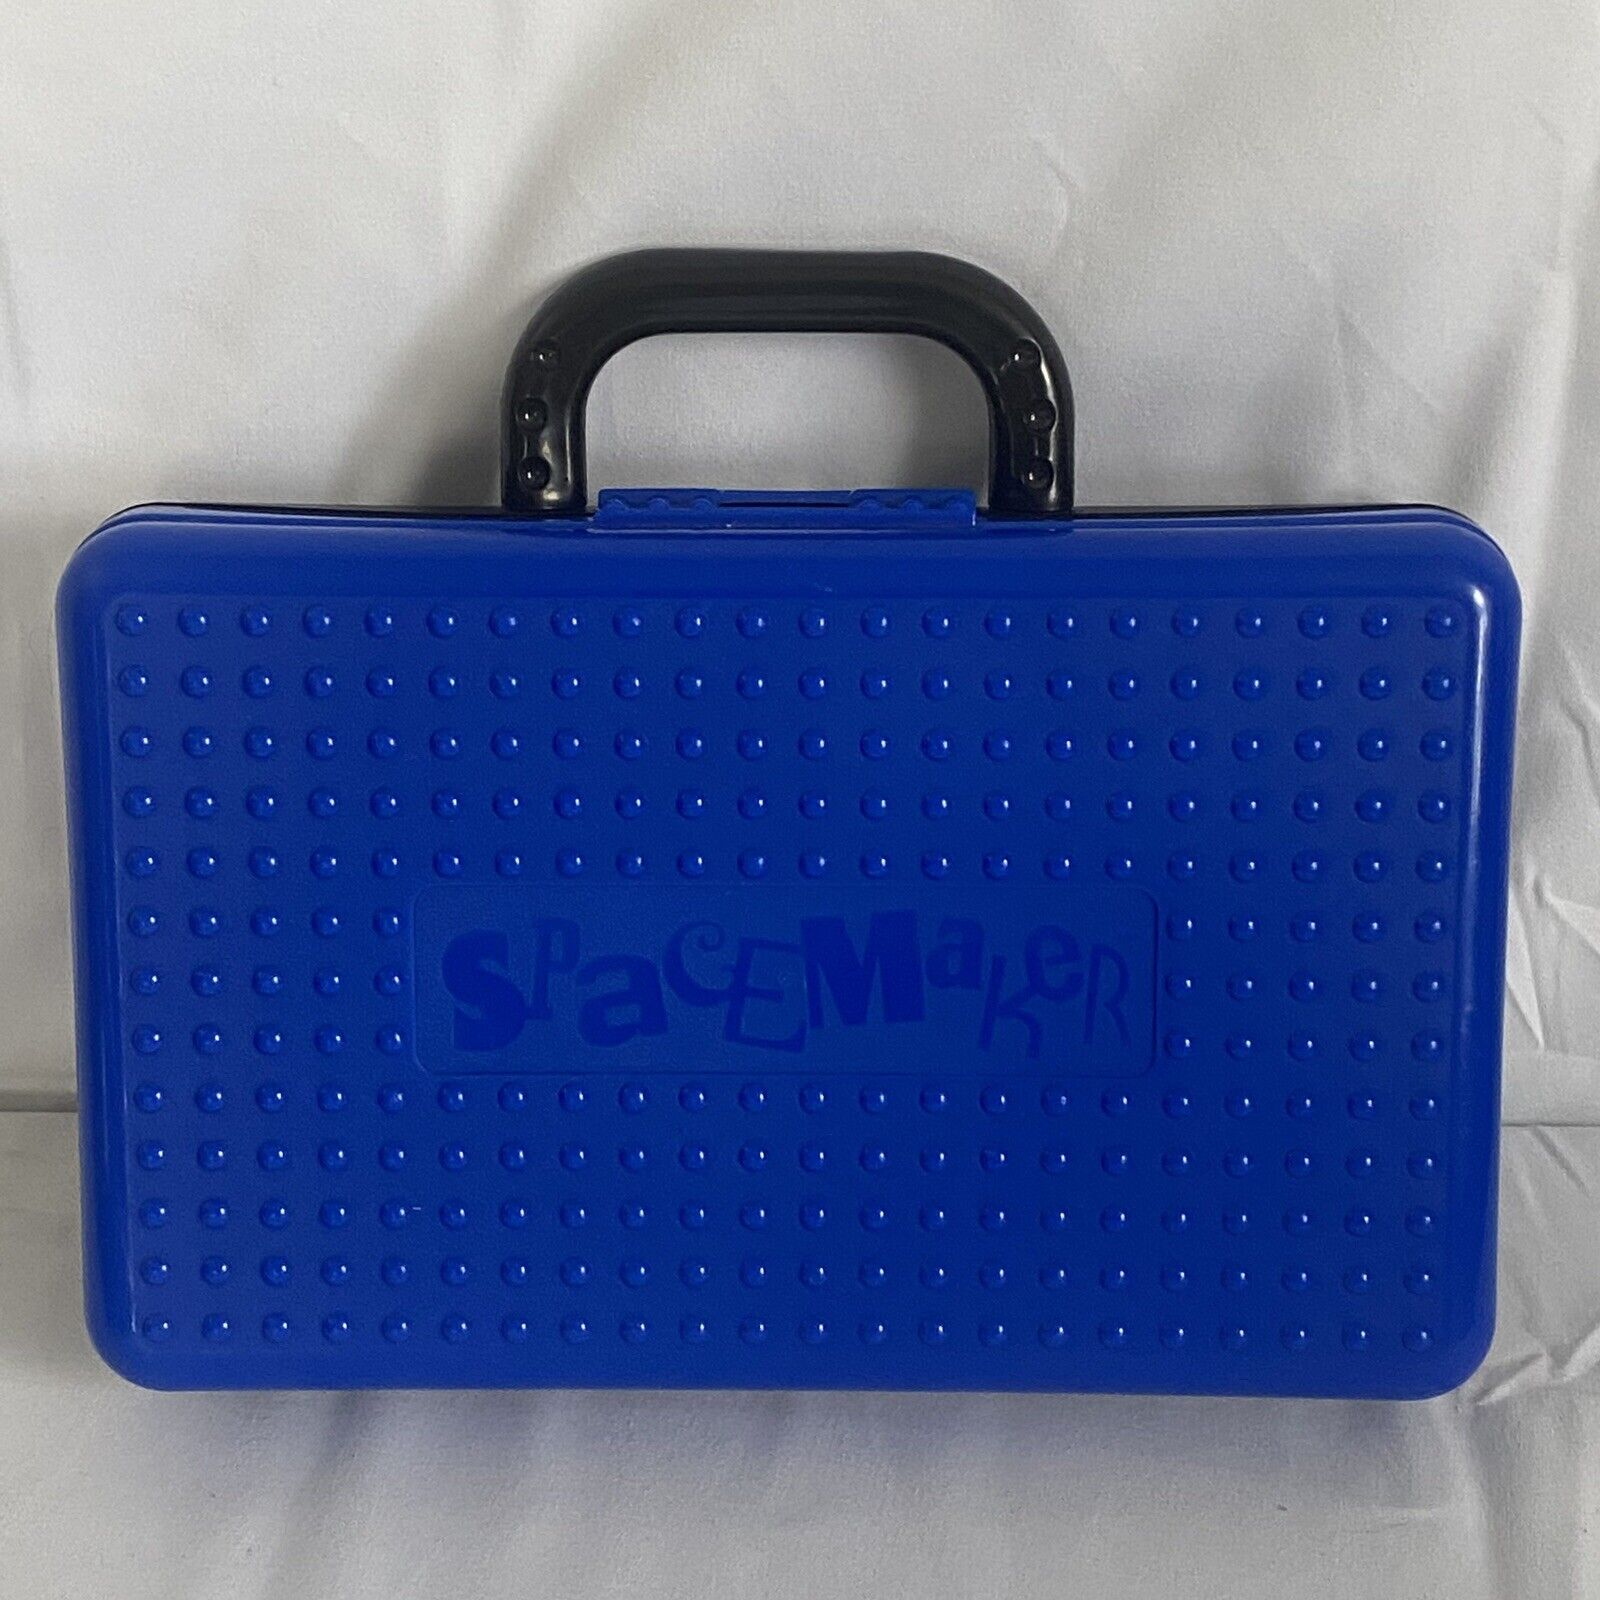 VTG Spacemaker Pencil Box Art Craft Carrying Case Large 11x7 Handle Blue & Black